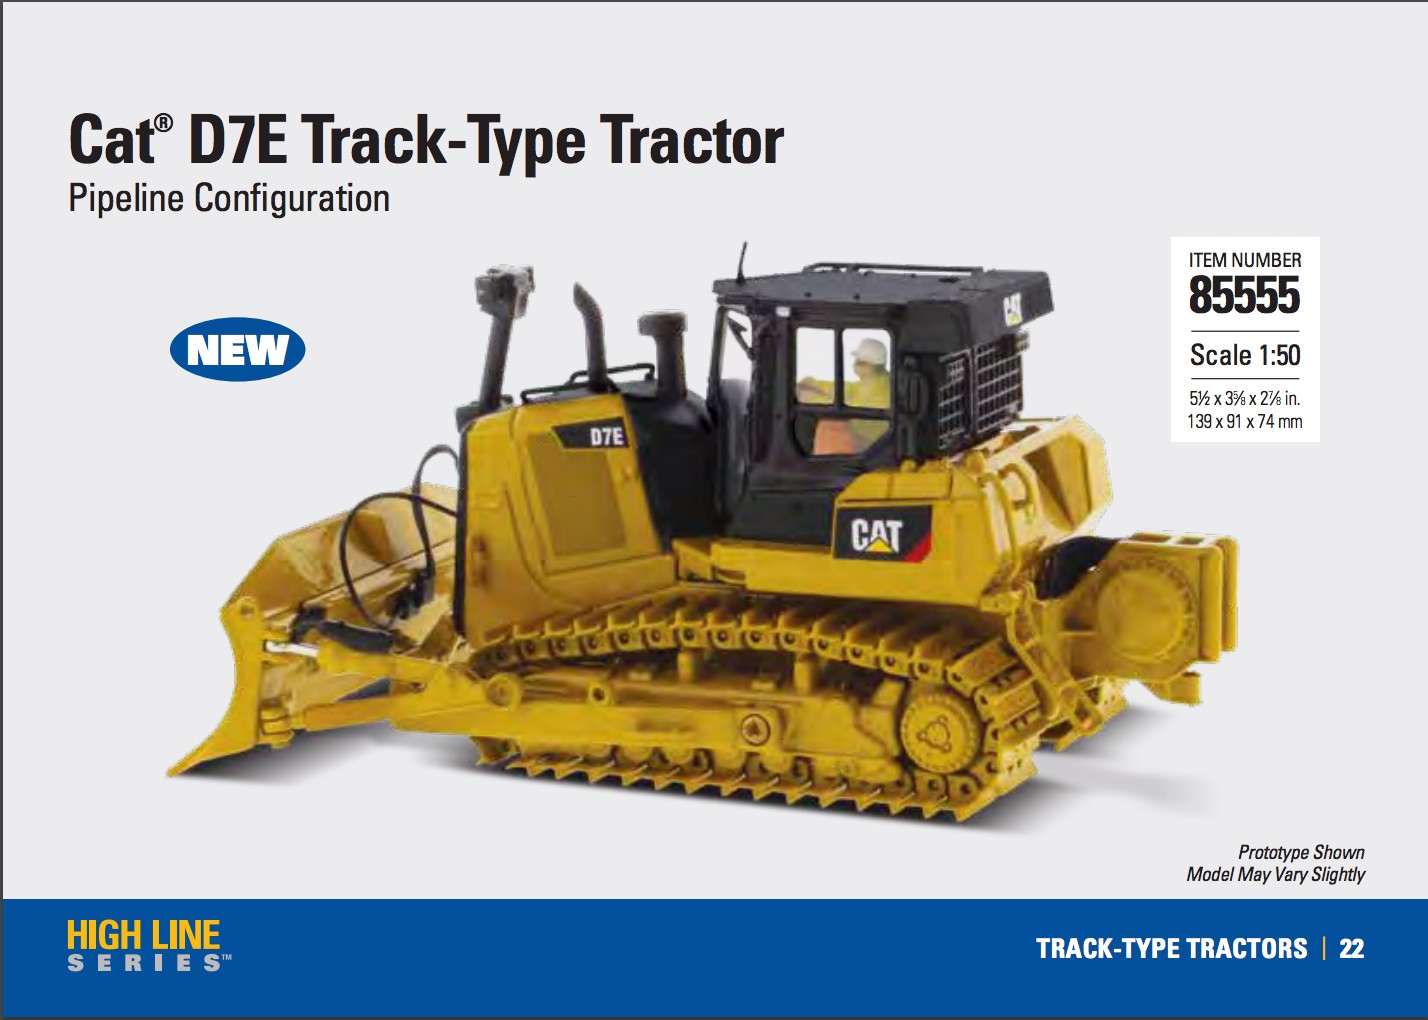 DM85555 - Caterpillar D7E track-type tractor - pipeline